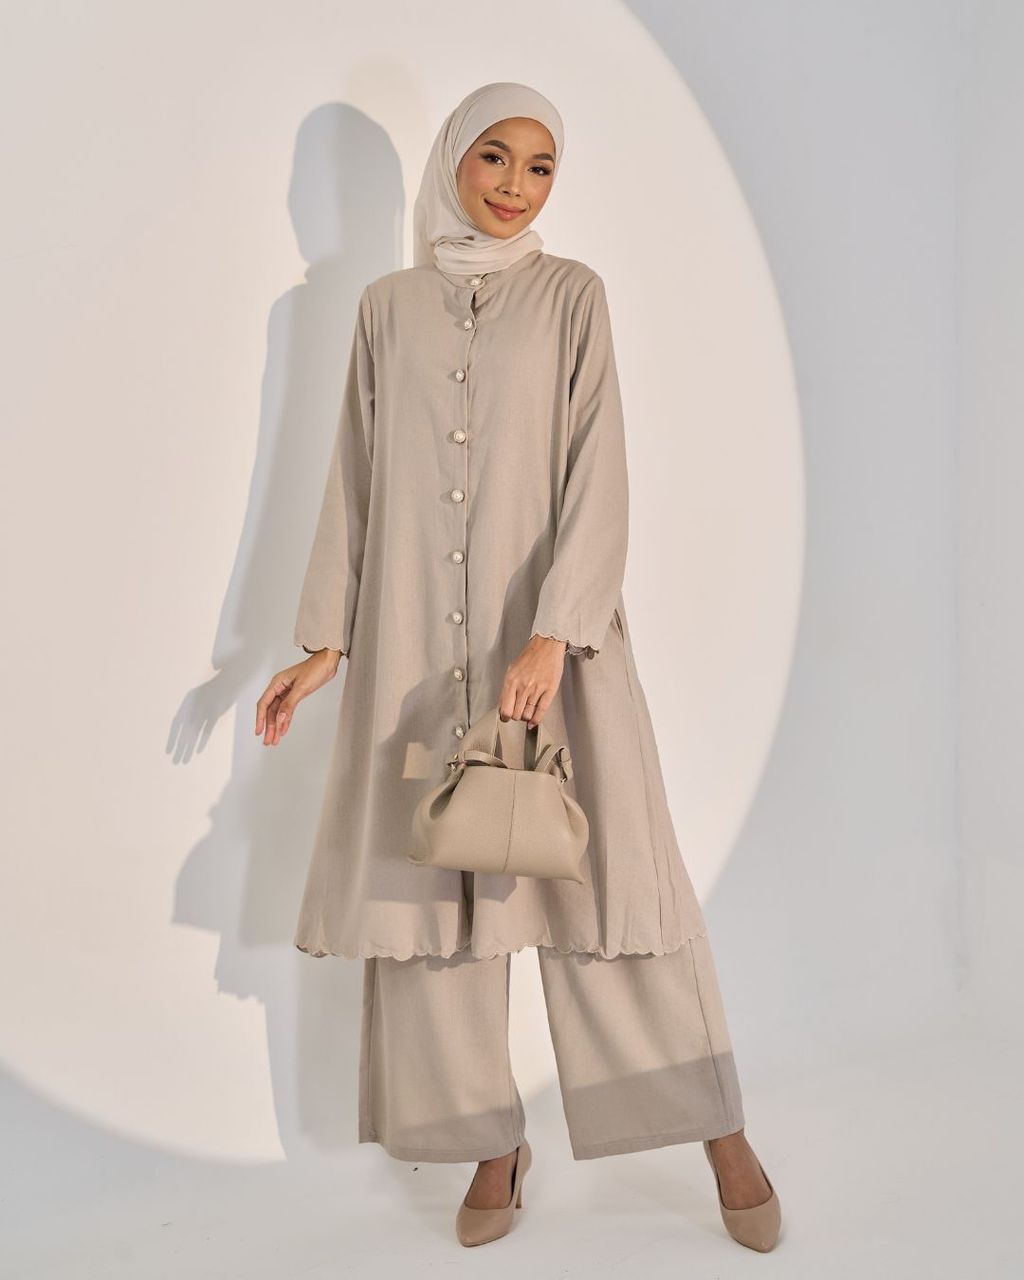 haura-wear-cotton-baju-muslimah-set-seluar-set-skirt-suit-muslimah-set-baju-dan-seluar-muslimah-palazzo (18)